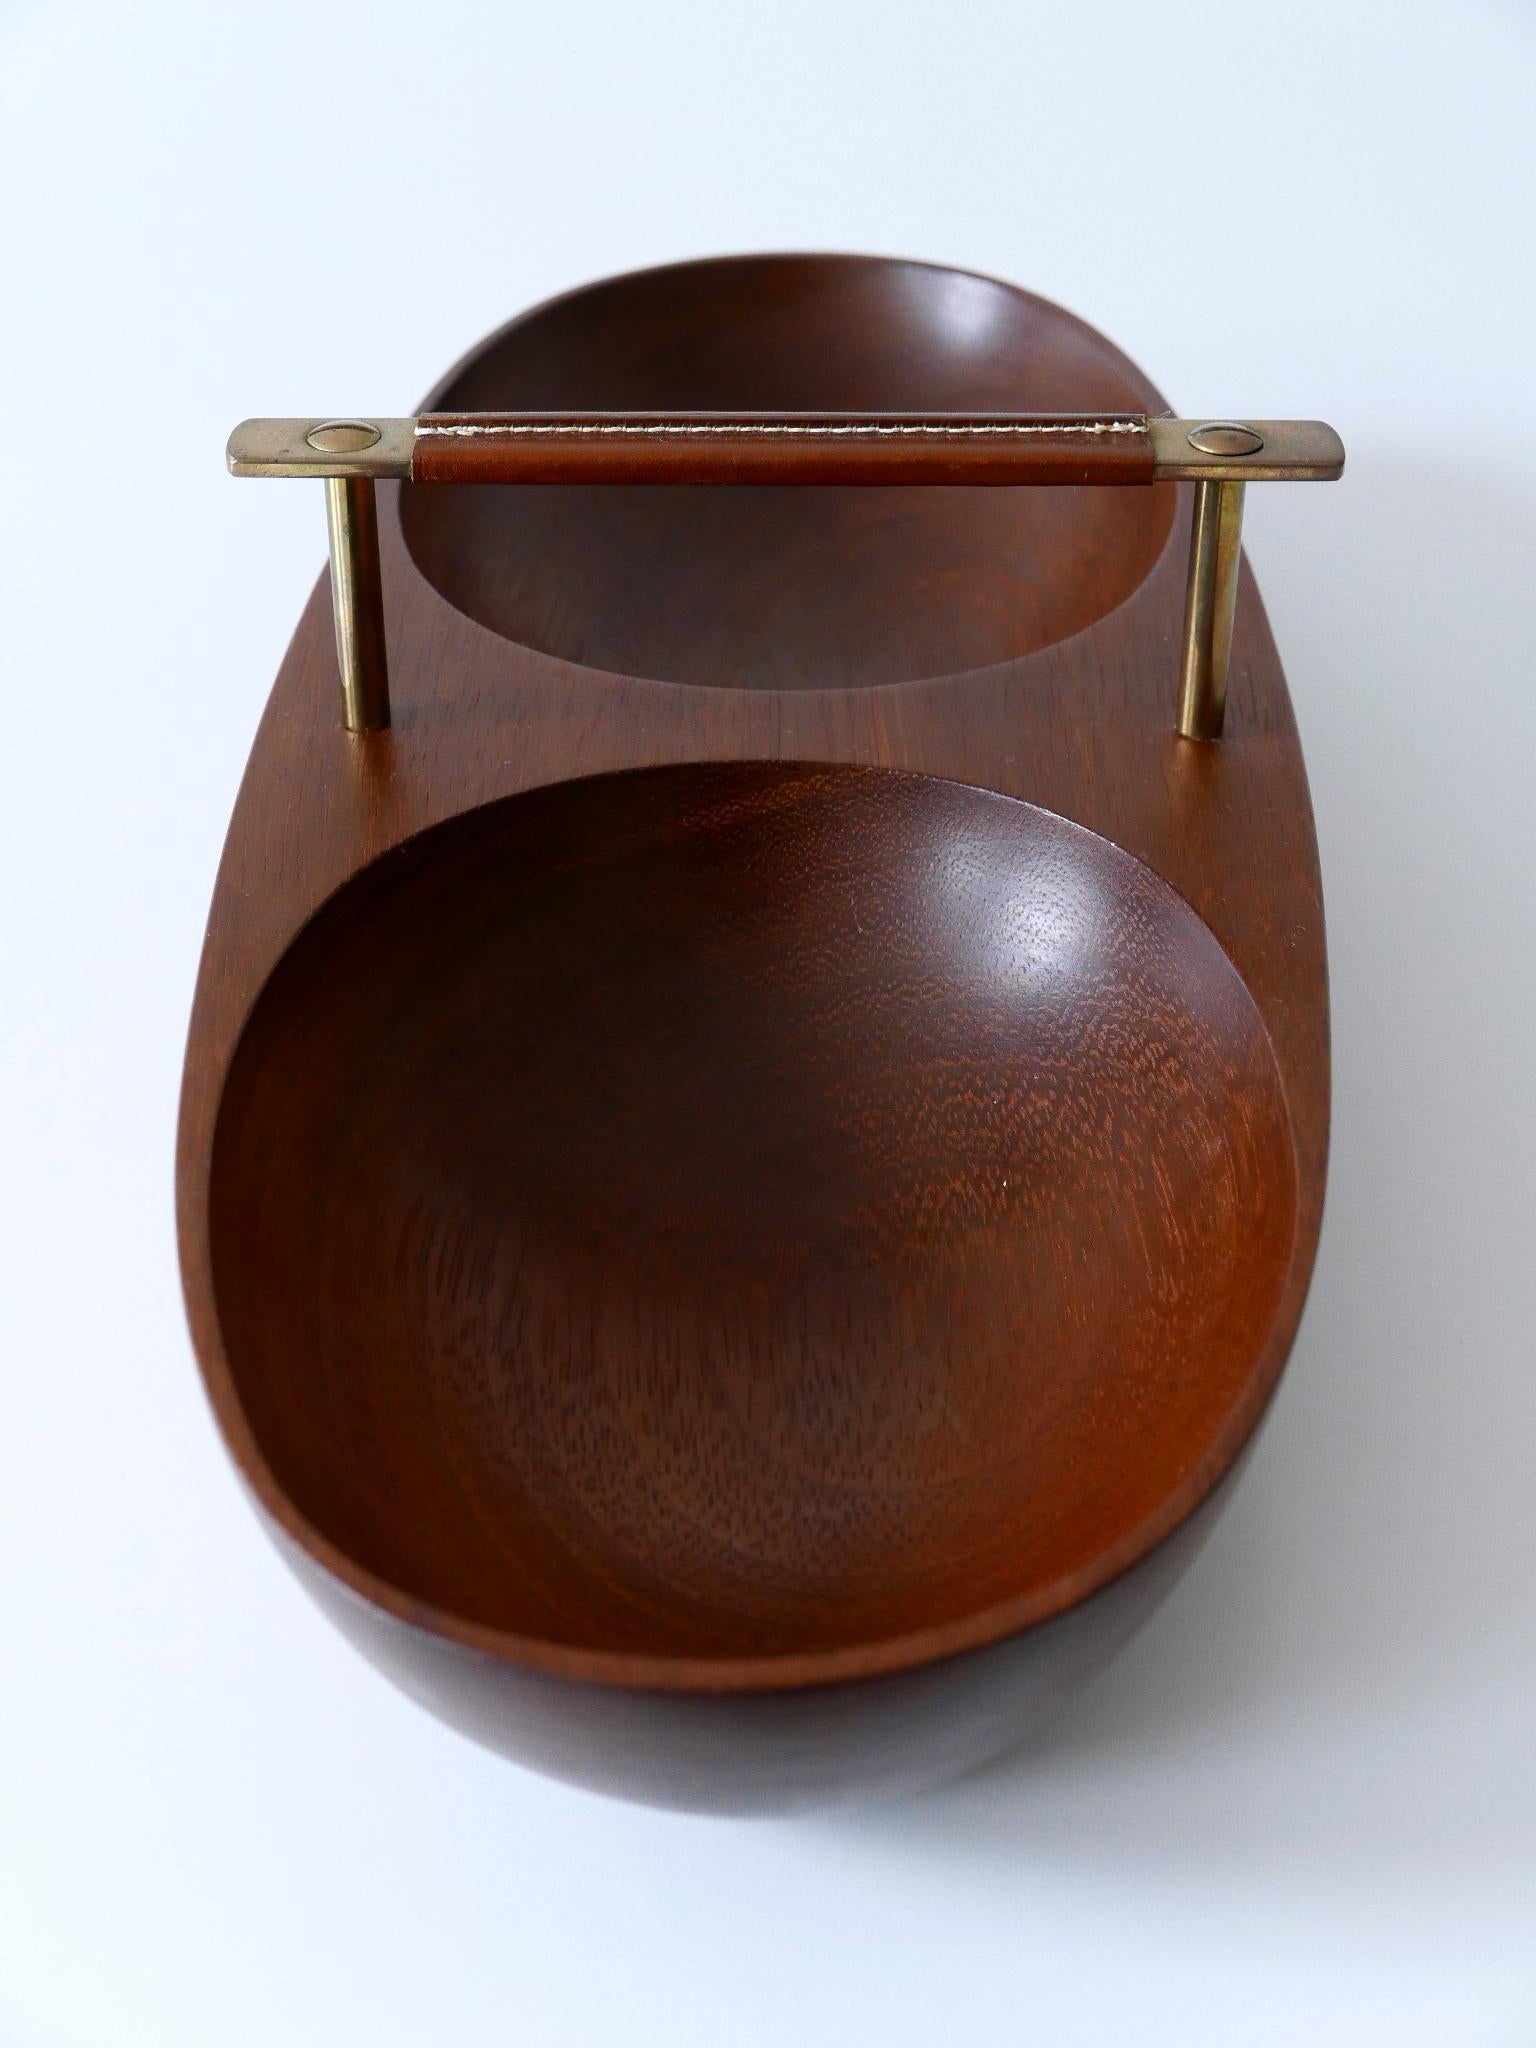 Exceptional Mid-Century Modern Teak Nut Bowl by Carl Auböck Austria 1950s For Sale 2